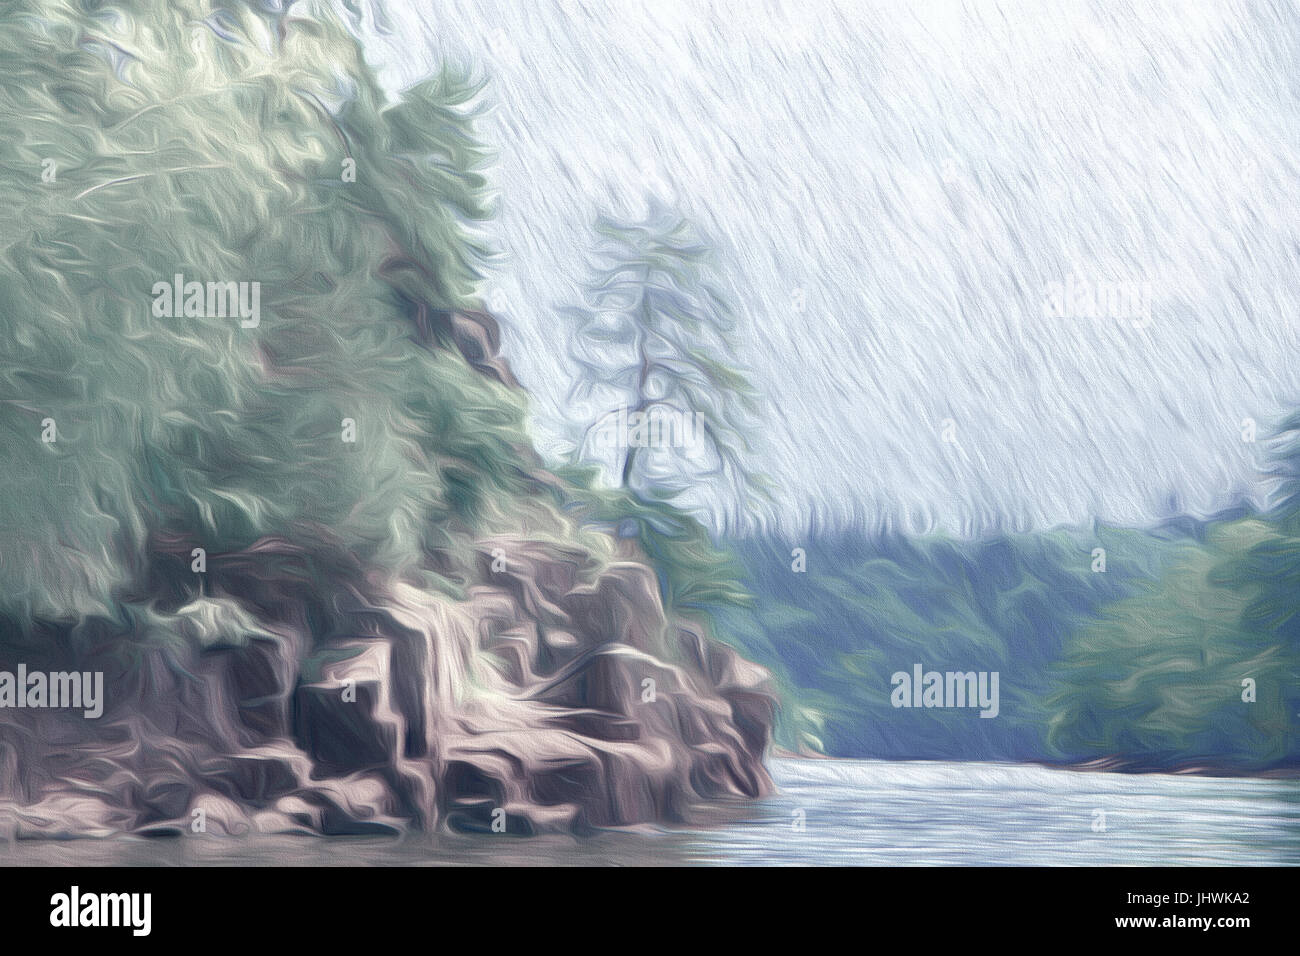 Lake landscape, digital painting illustration in impressionistic style Stock Photo